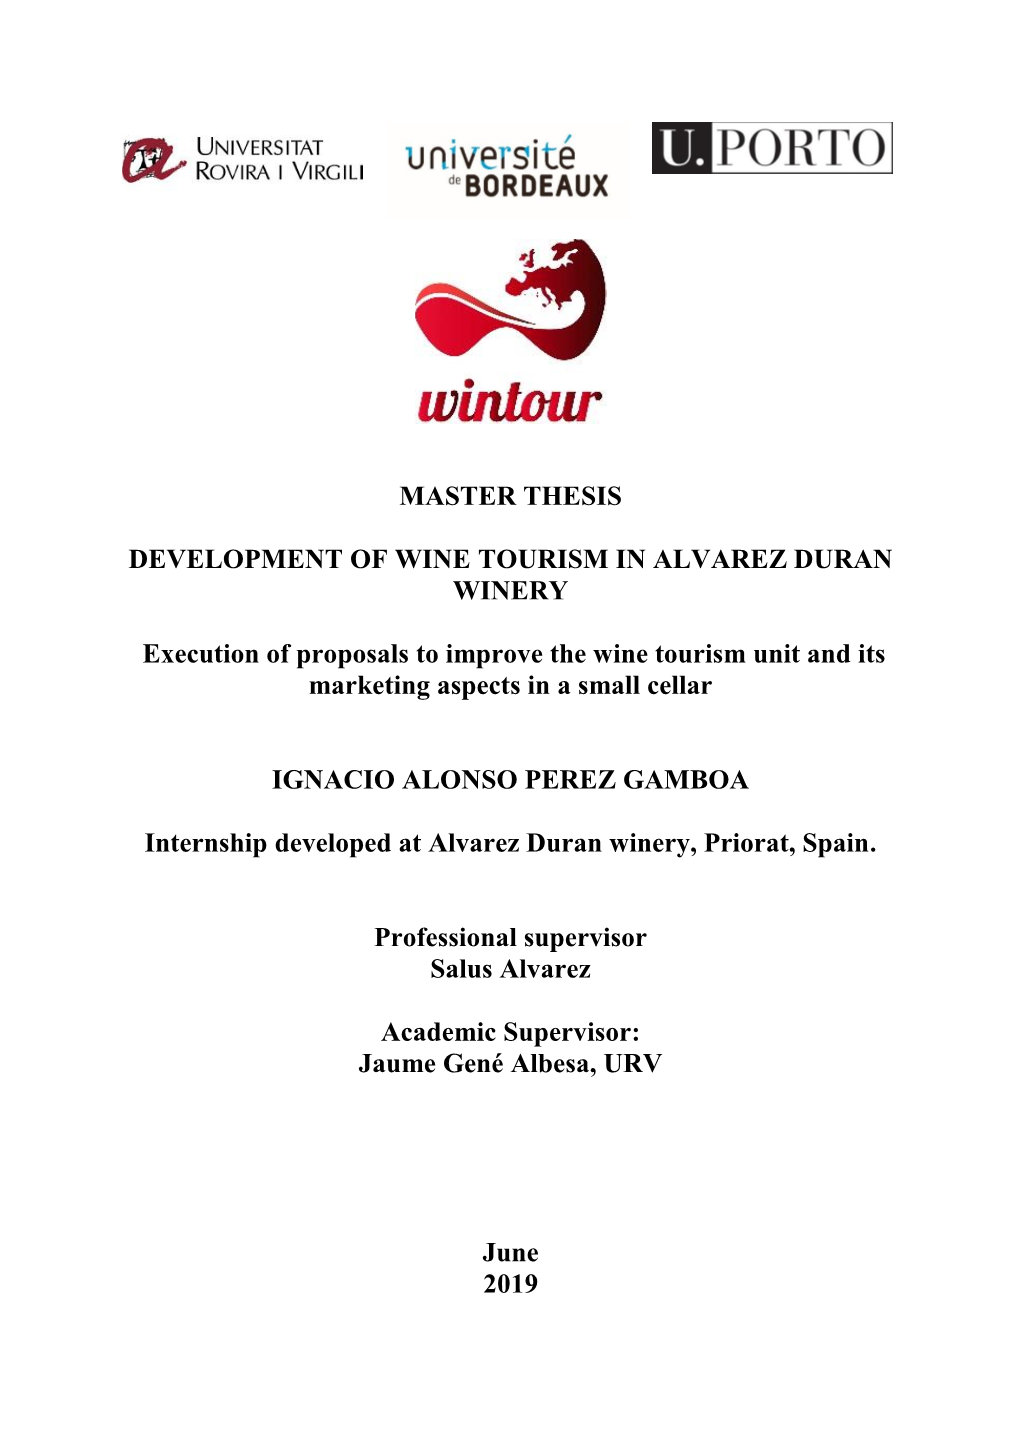 Master Thesis Development of Wine Tourism in Alvarez